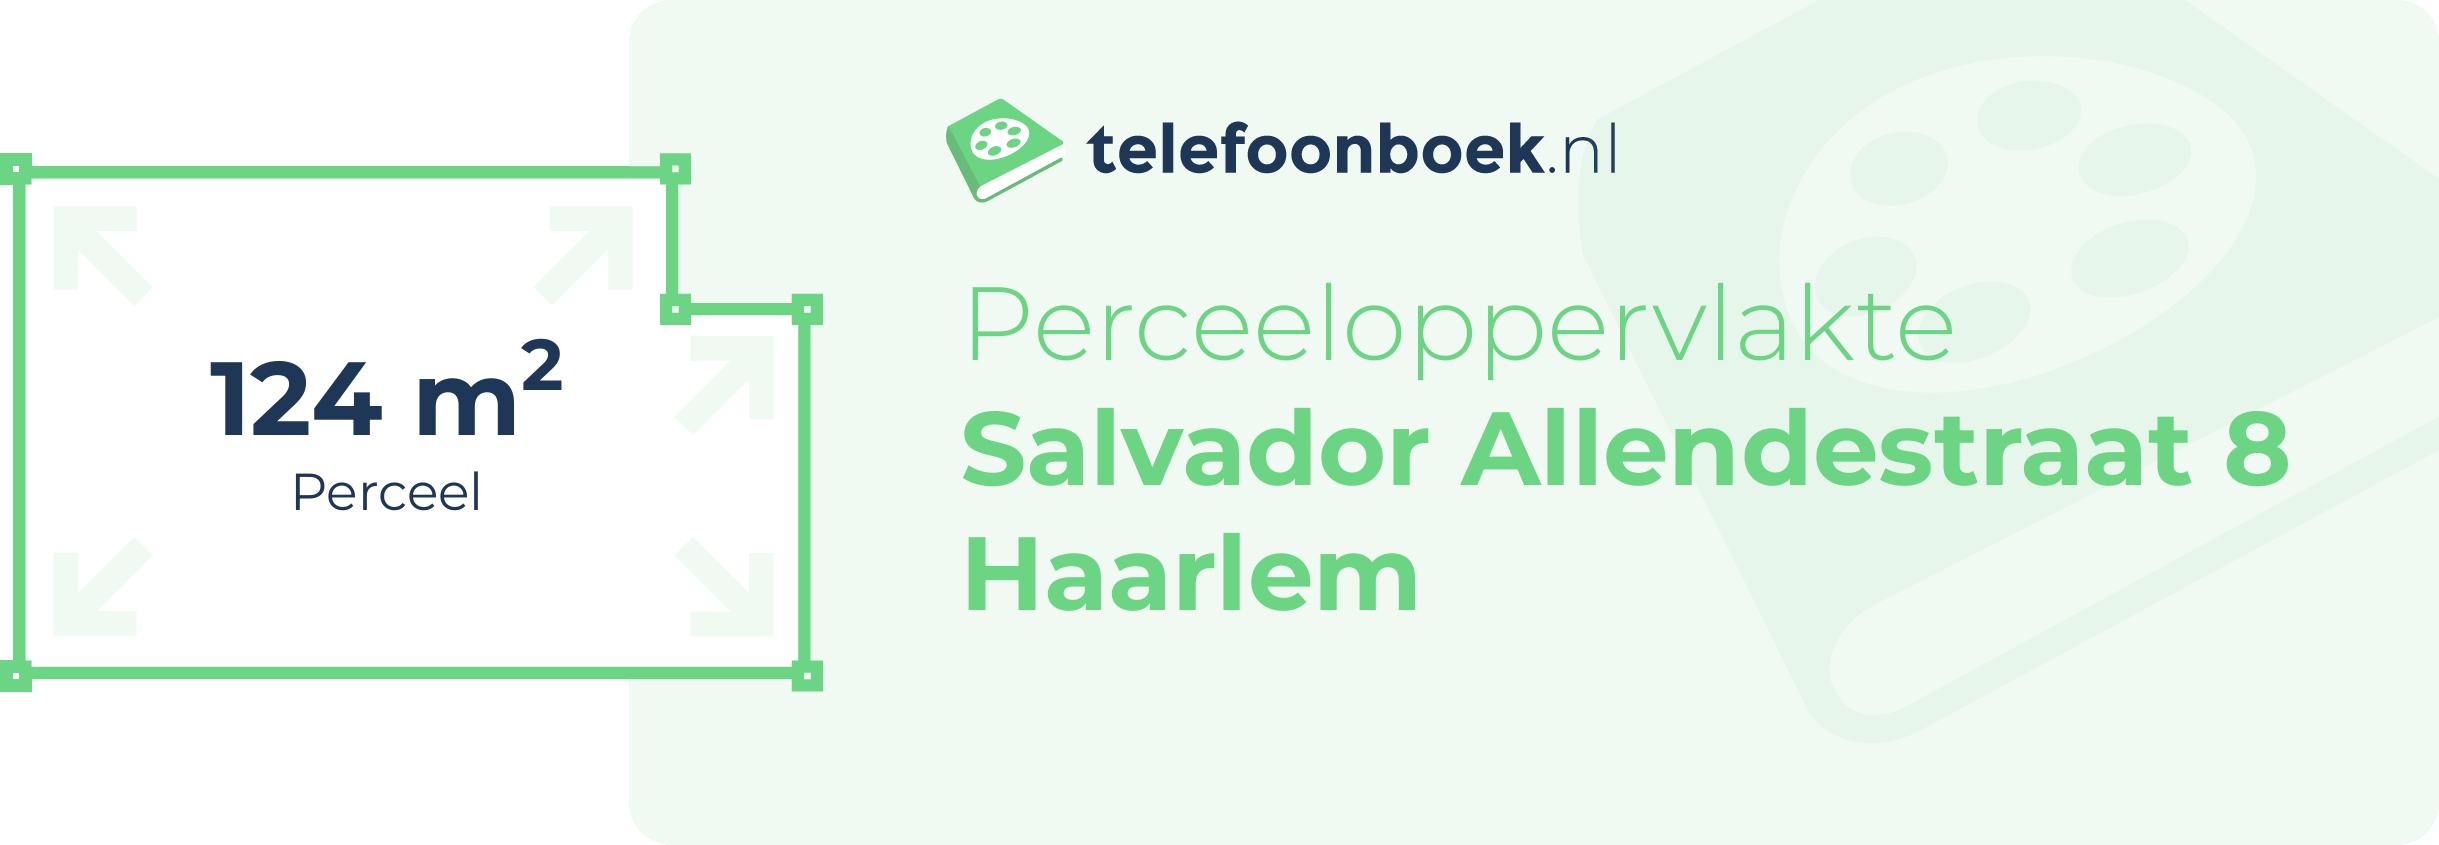 Perceeloppervlakte Salvador Allendestraat 8 Haarlem